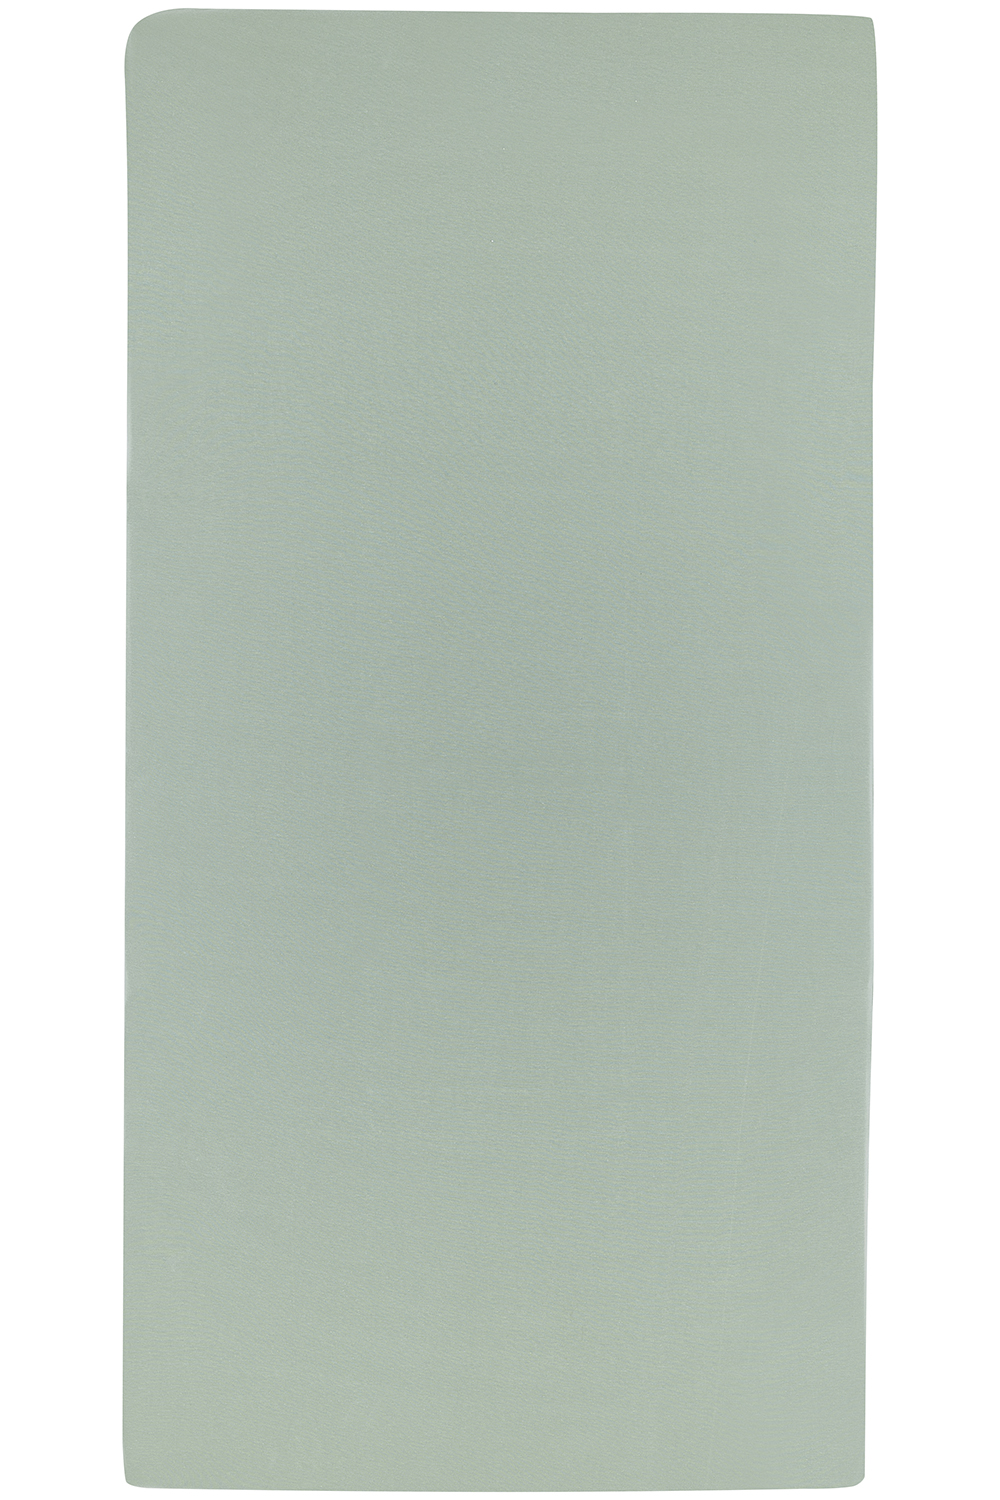 Matratzenbezug für Campingbetten Uni - stone green - 60x120cm